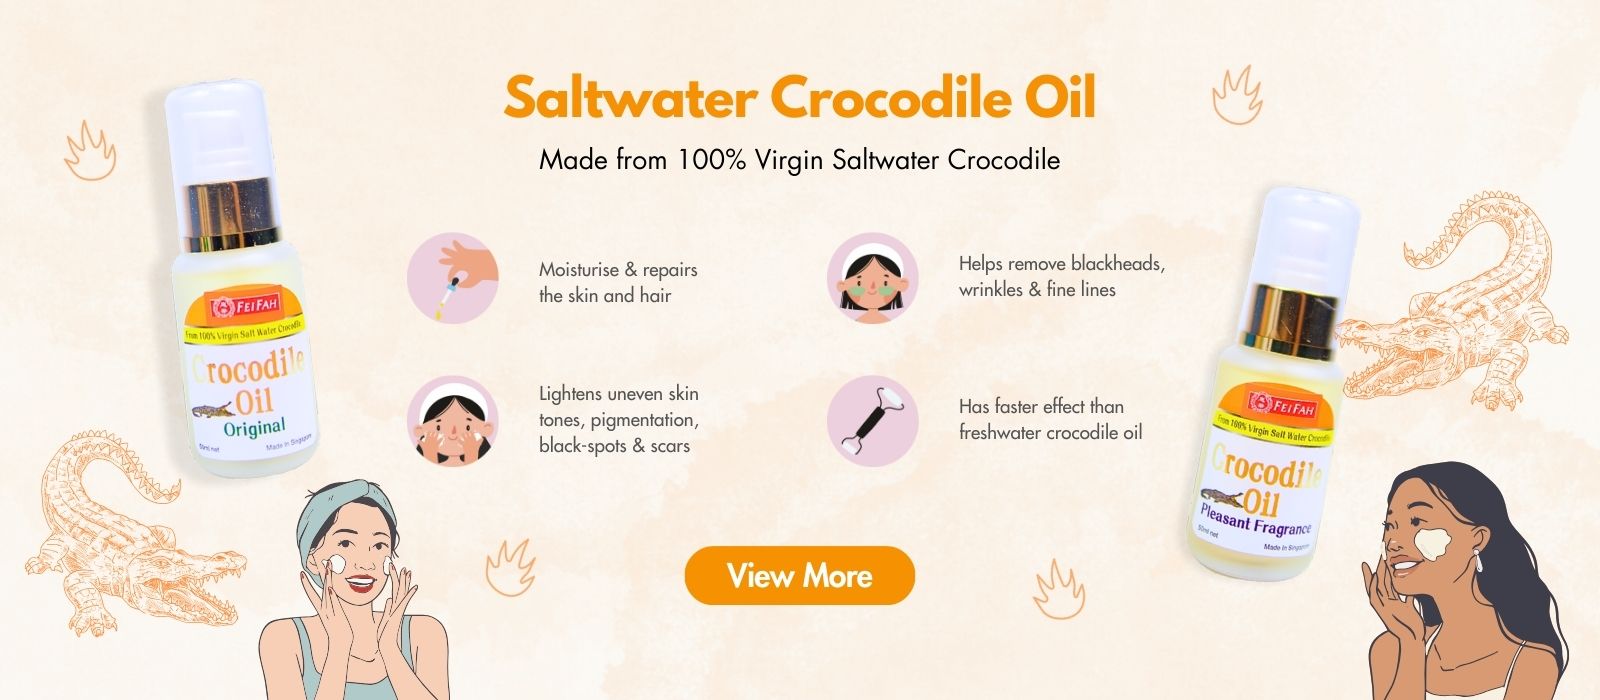 Benefits of Saltwater Crocodile Oil